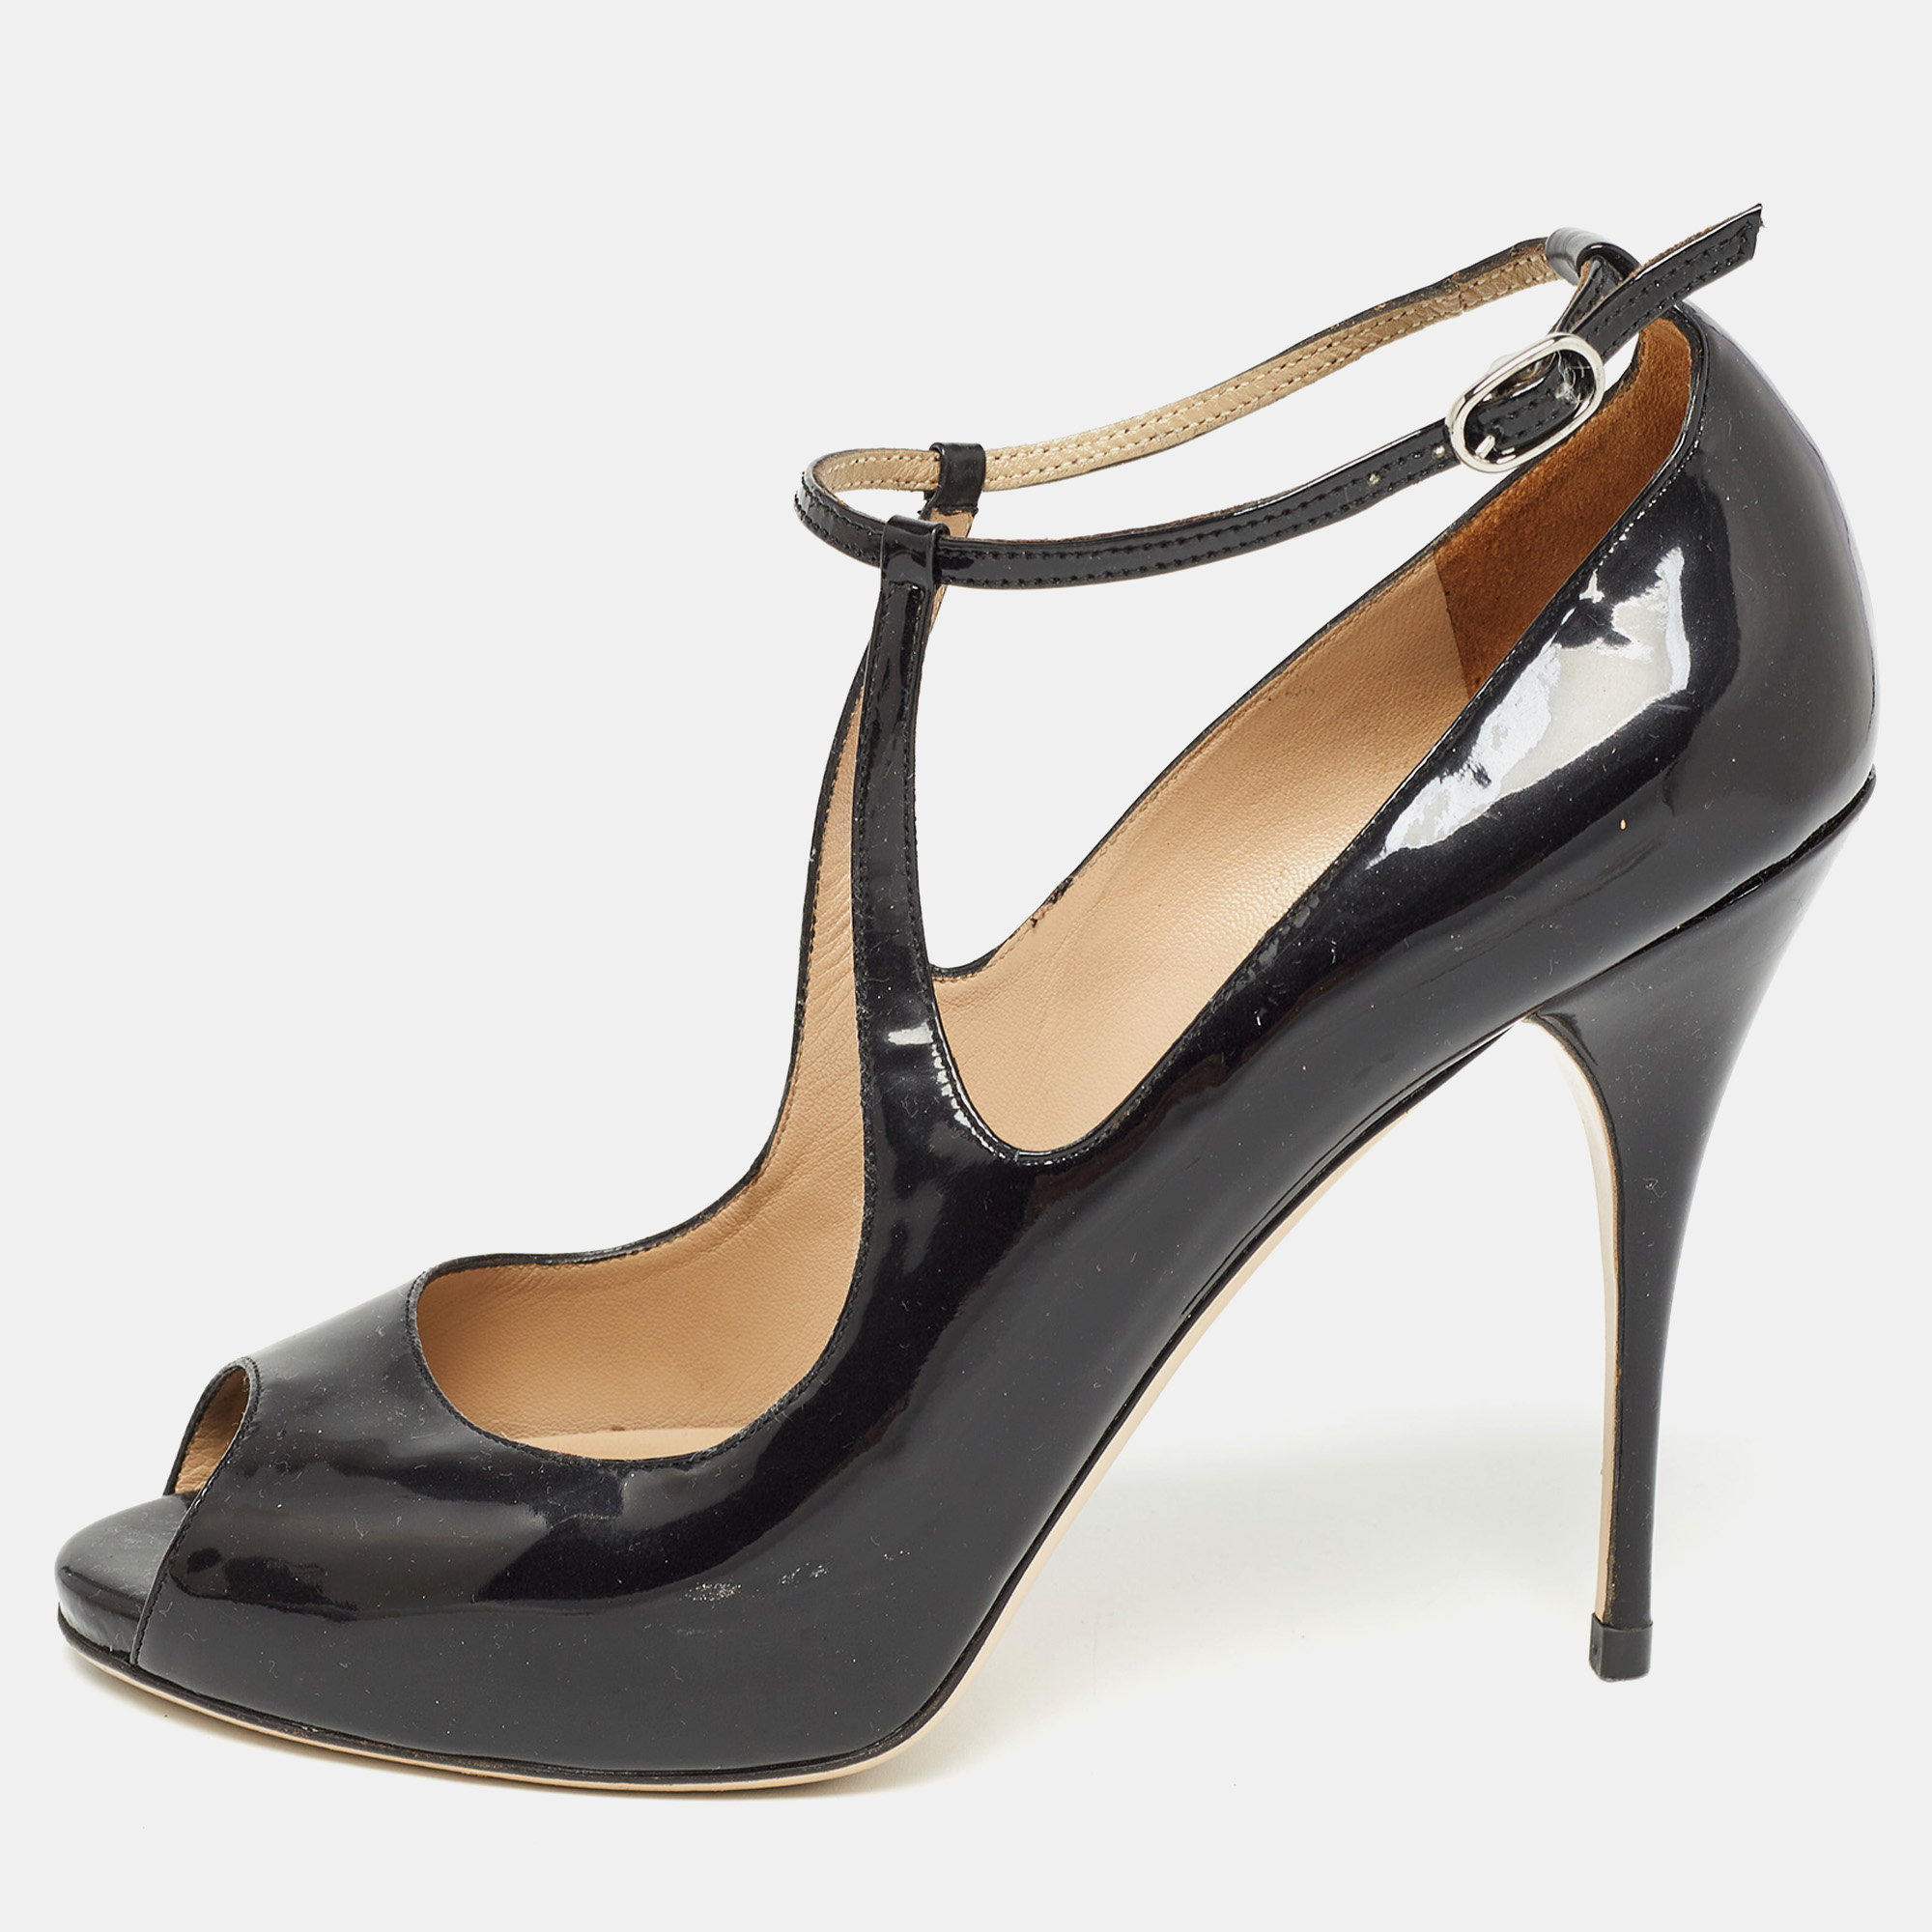 Pre-owned Valentino Garavani Black Patent Leather Ankle Strap Pumps Size 39.5